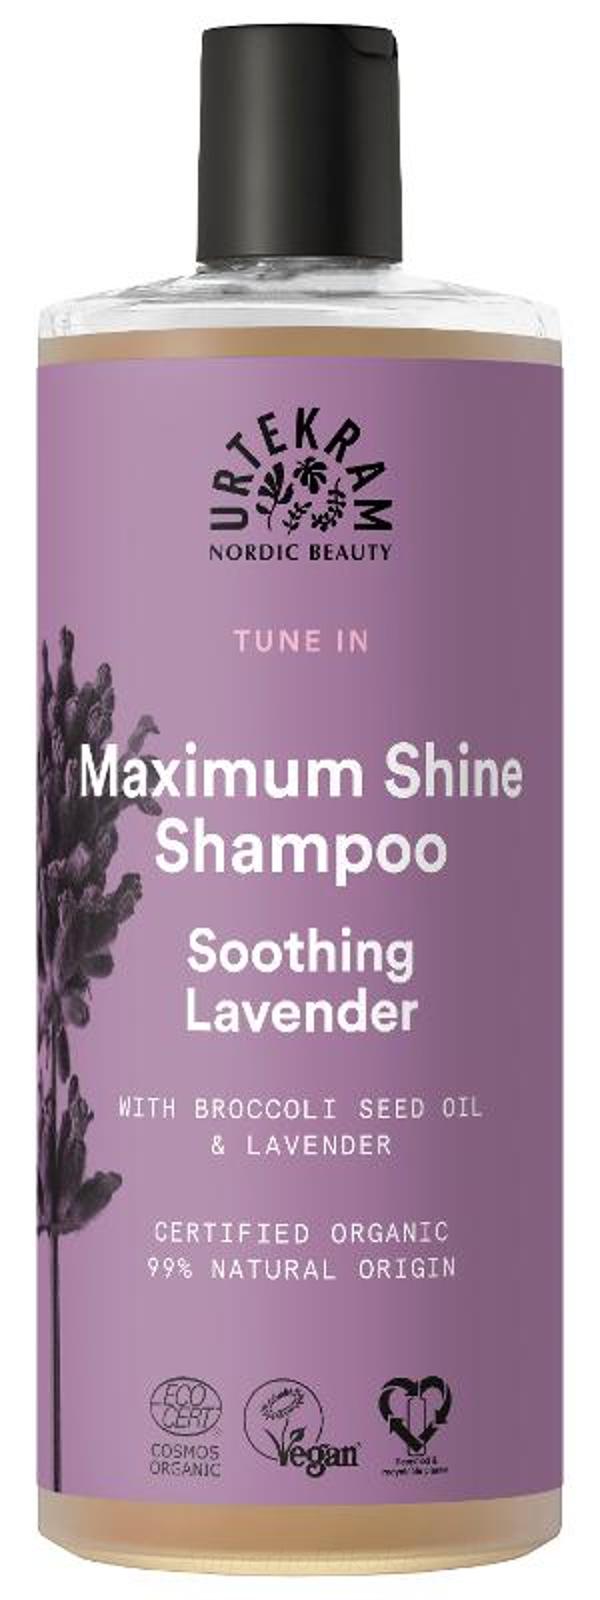 Produktfoto zu Shampoo Lavender 500 ml